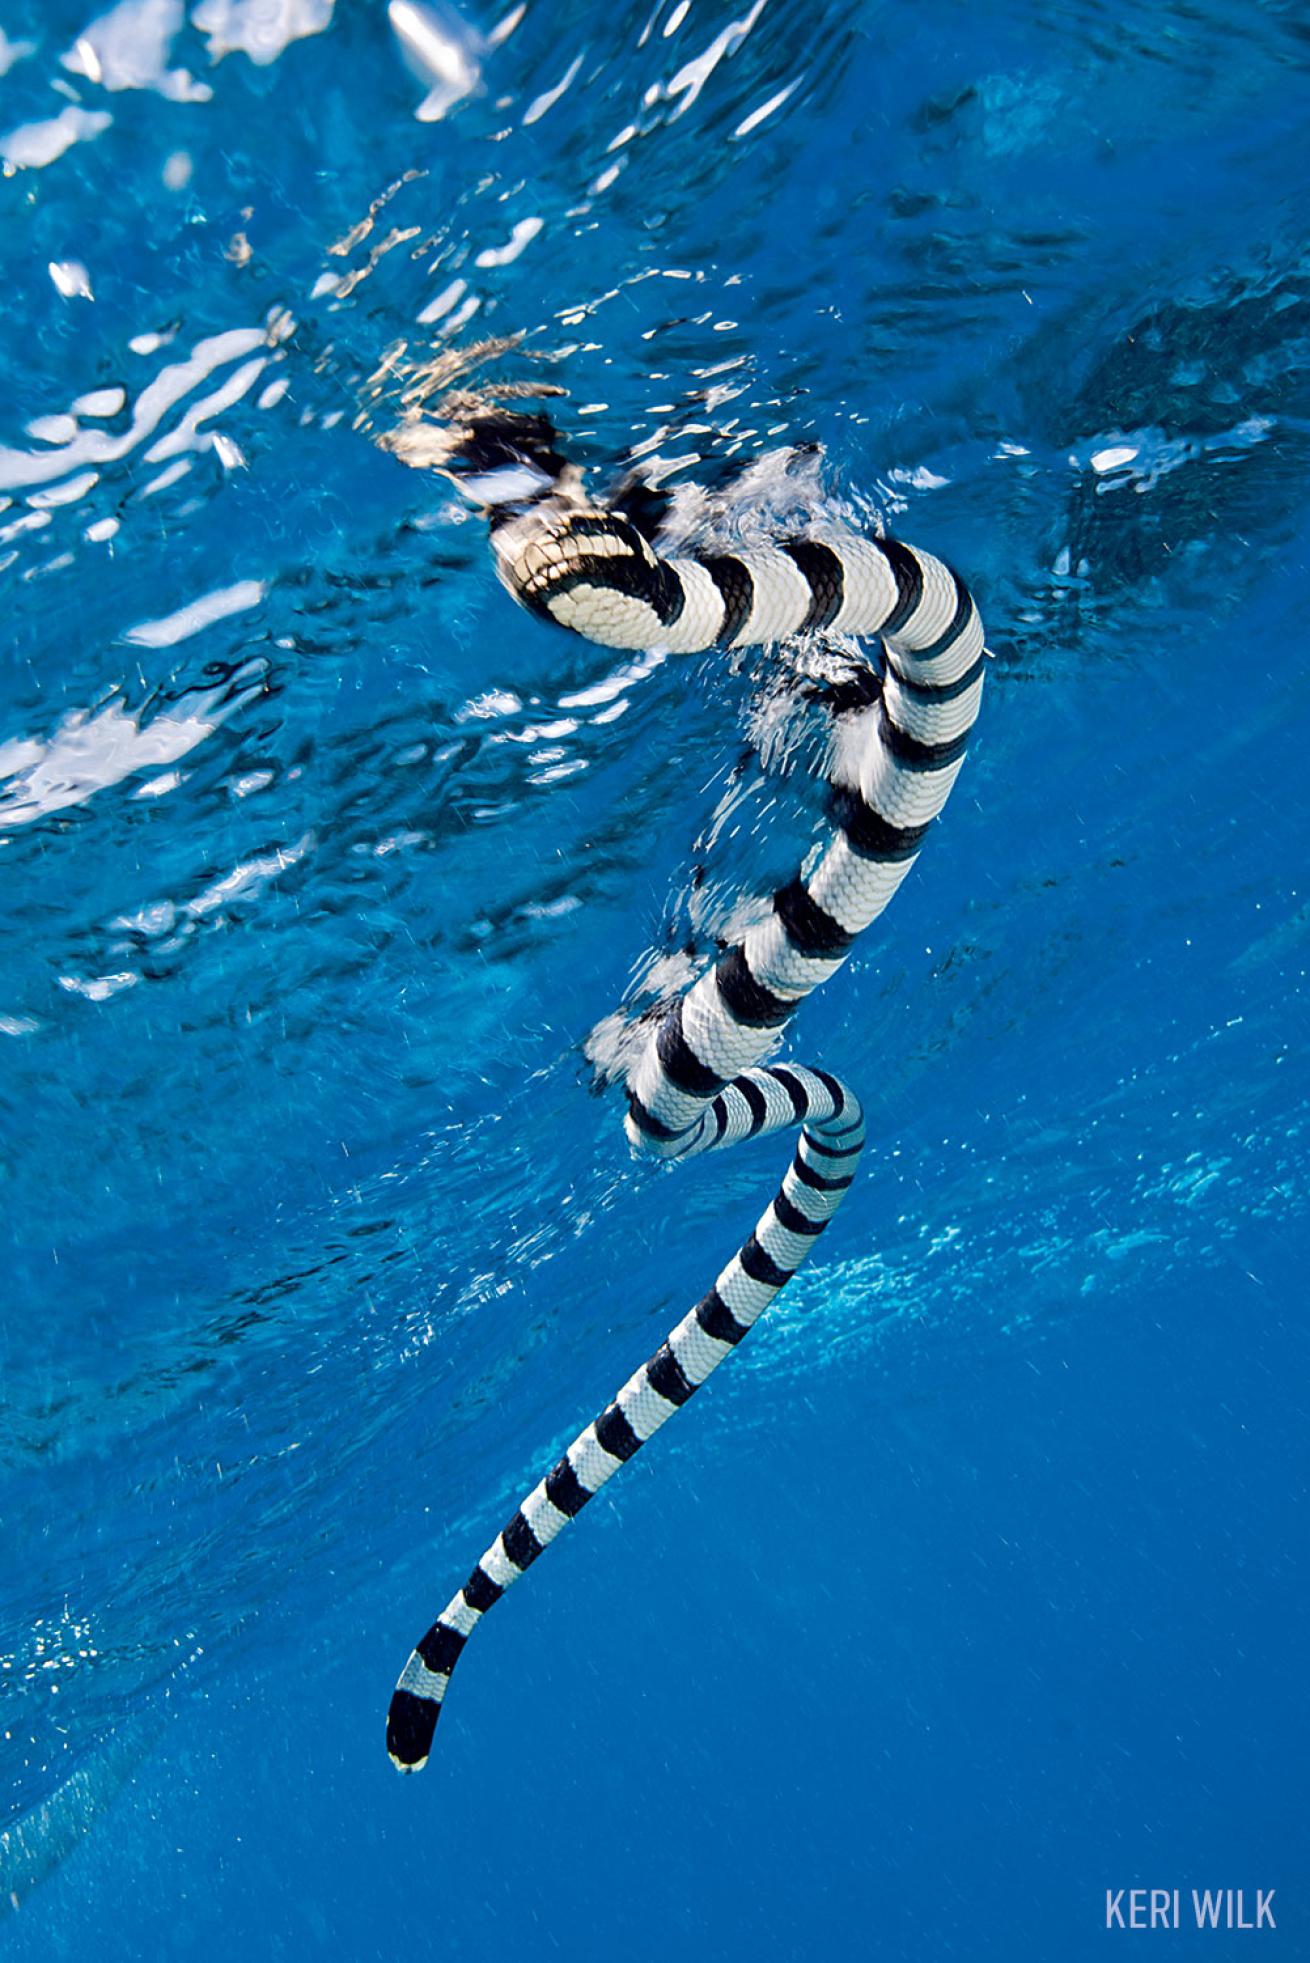 Sea Krait Snake in Indonesia